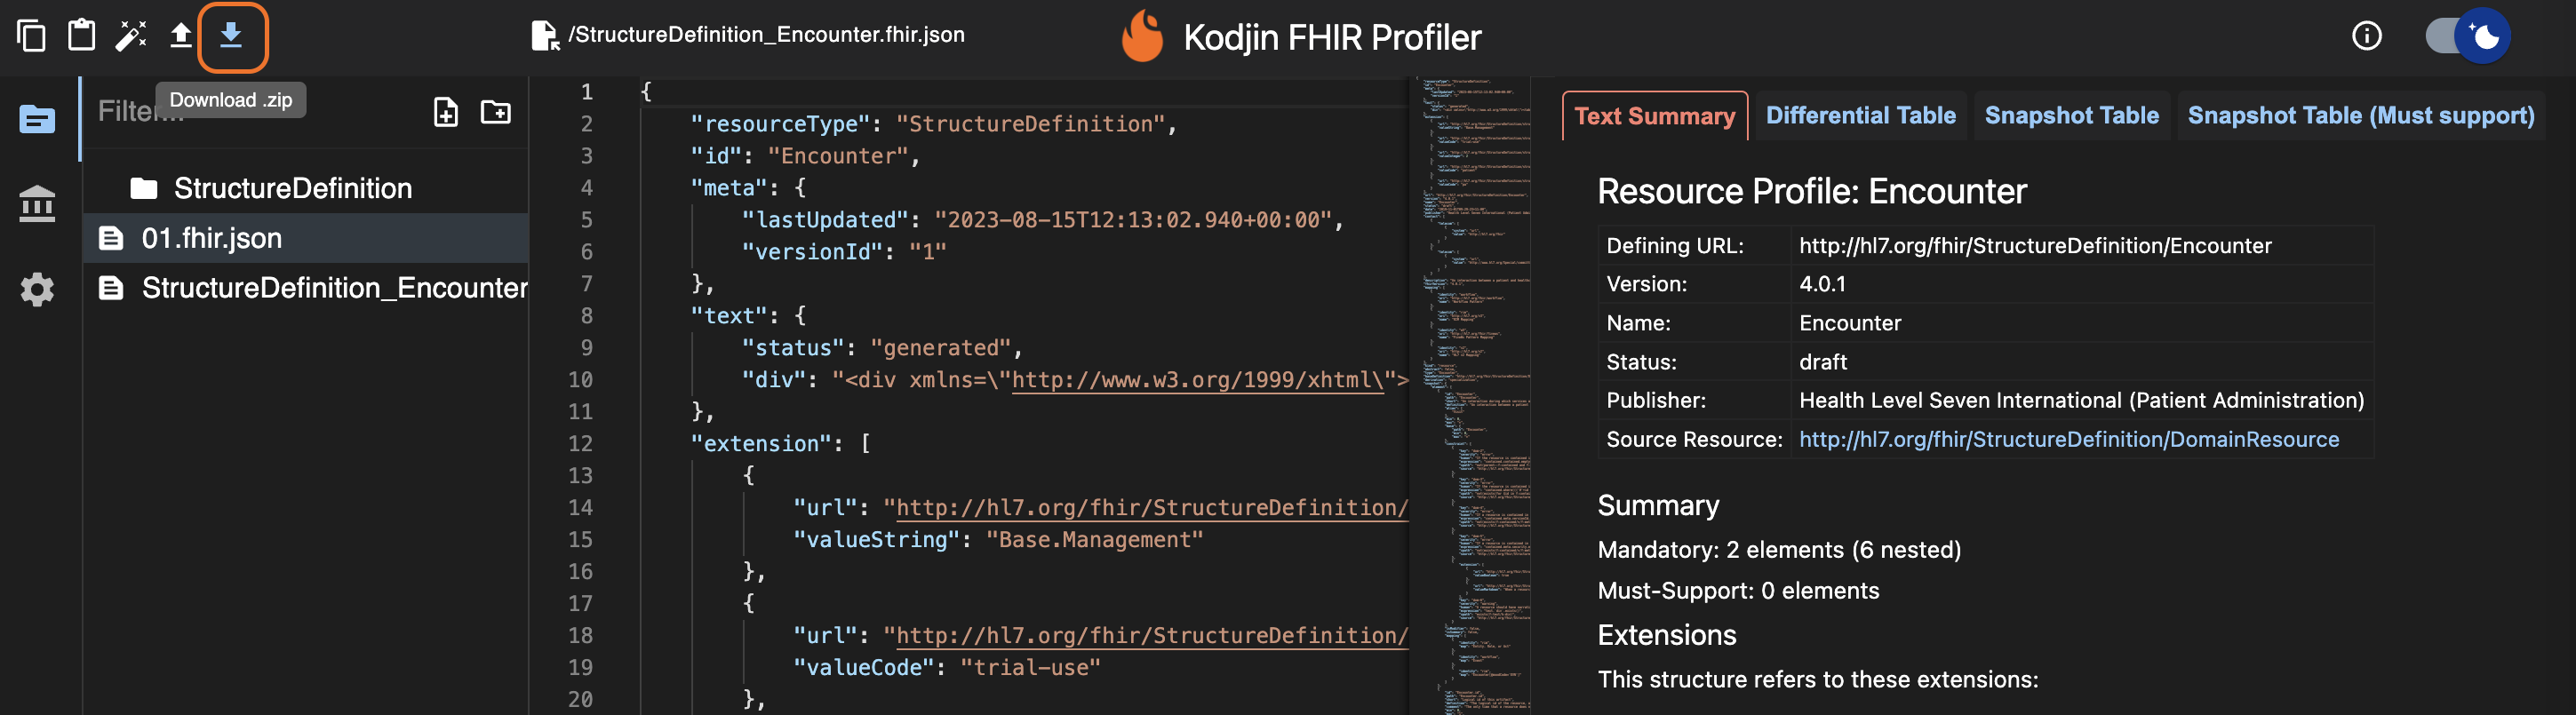 Kodjin FHIR Profiler download archive